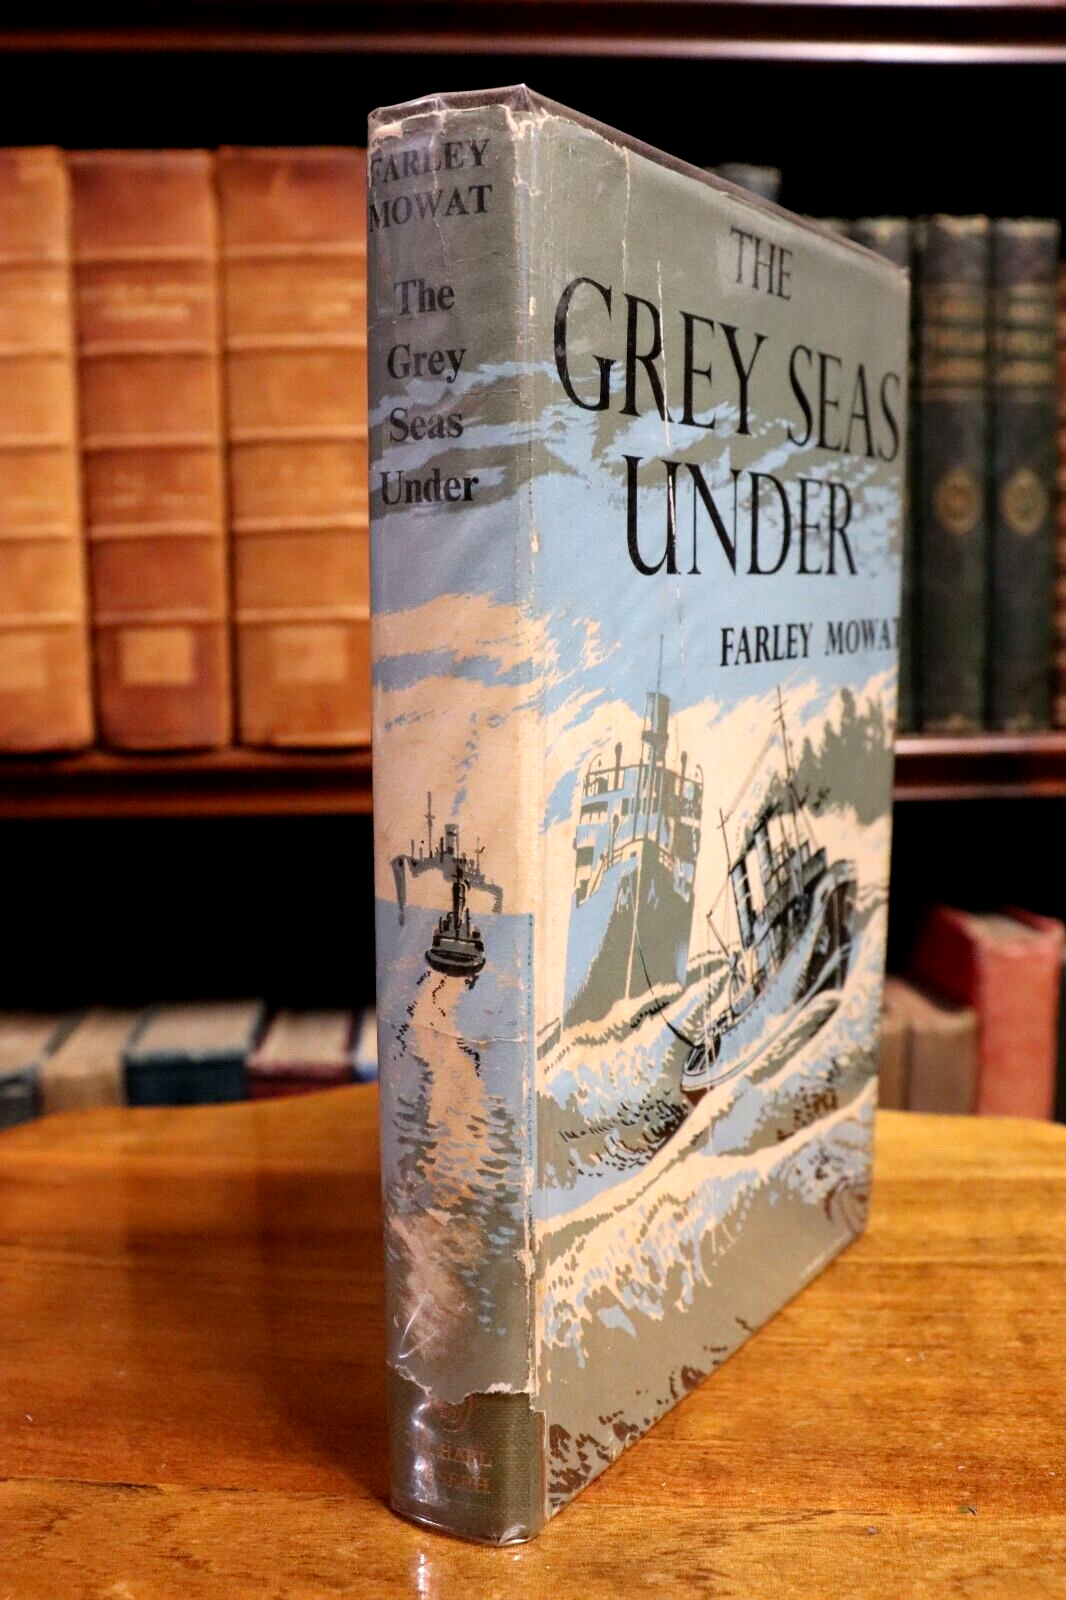 The Grey Seas Under by Farley Mowat - 1959 - 1st Edition Sea Adventure Book